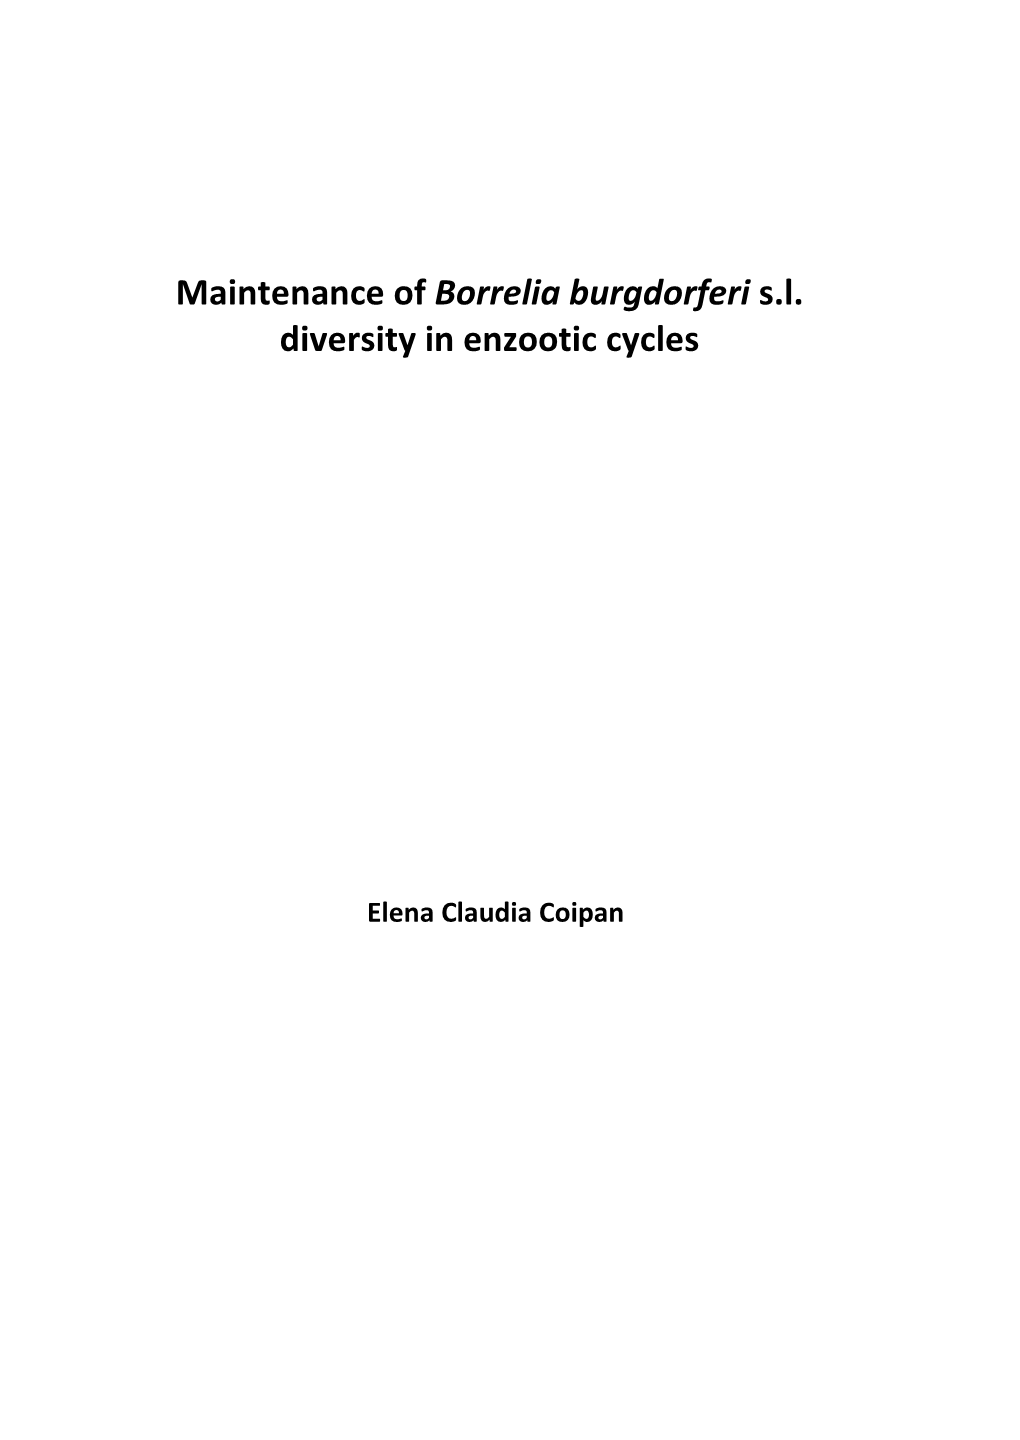 Maintenance of Borrelia Burgdorferi S.L. Diversity in Enzootic Cycles